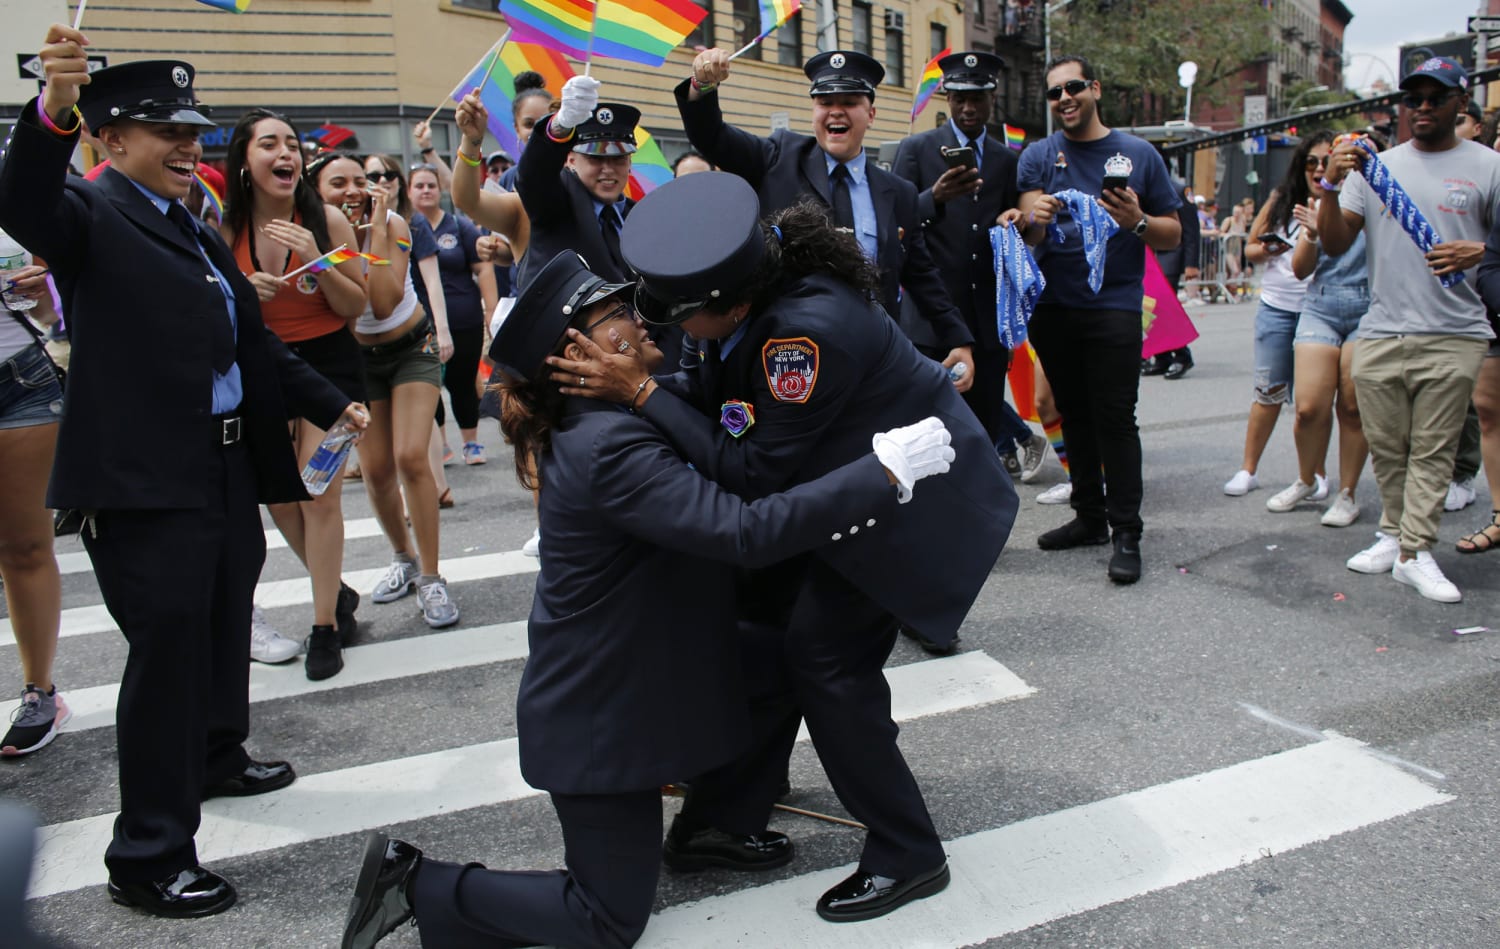 New York City Gay Pride Parade 2014 – New York Daily News